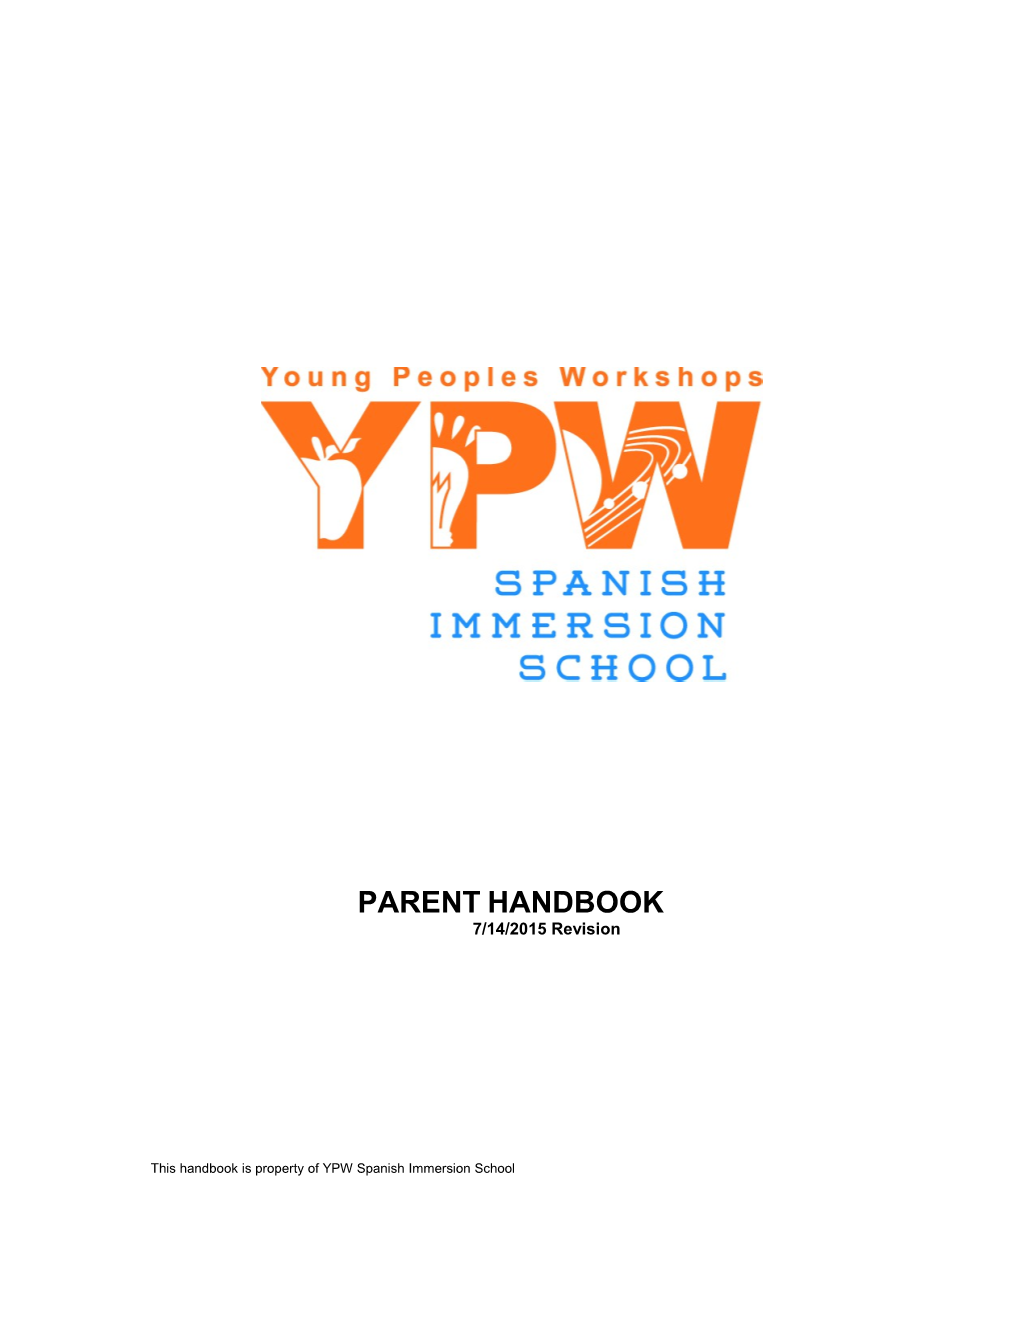 YPW Spanish Immersion Preschool